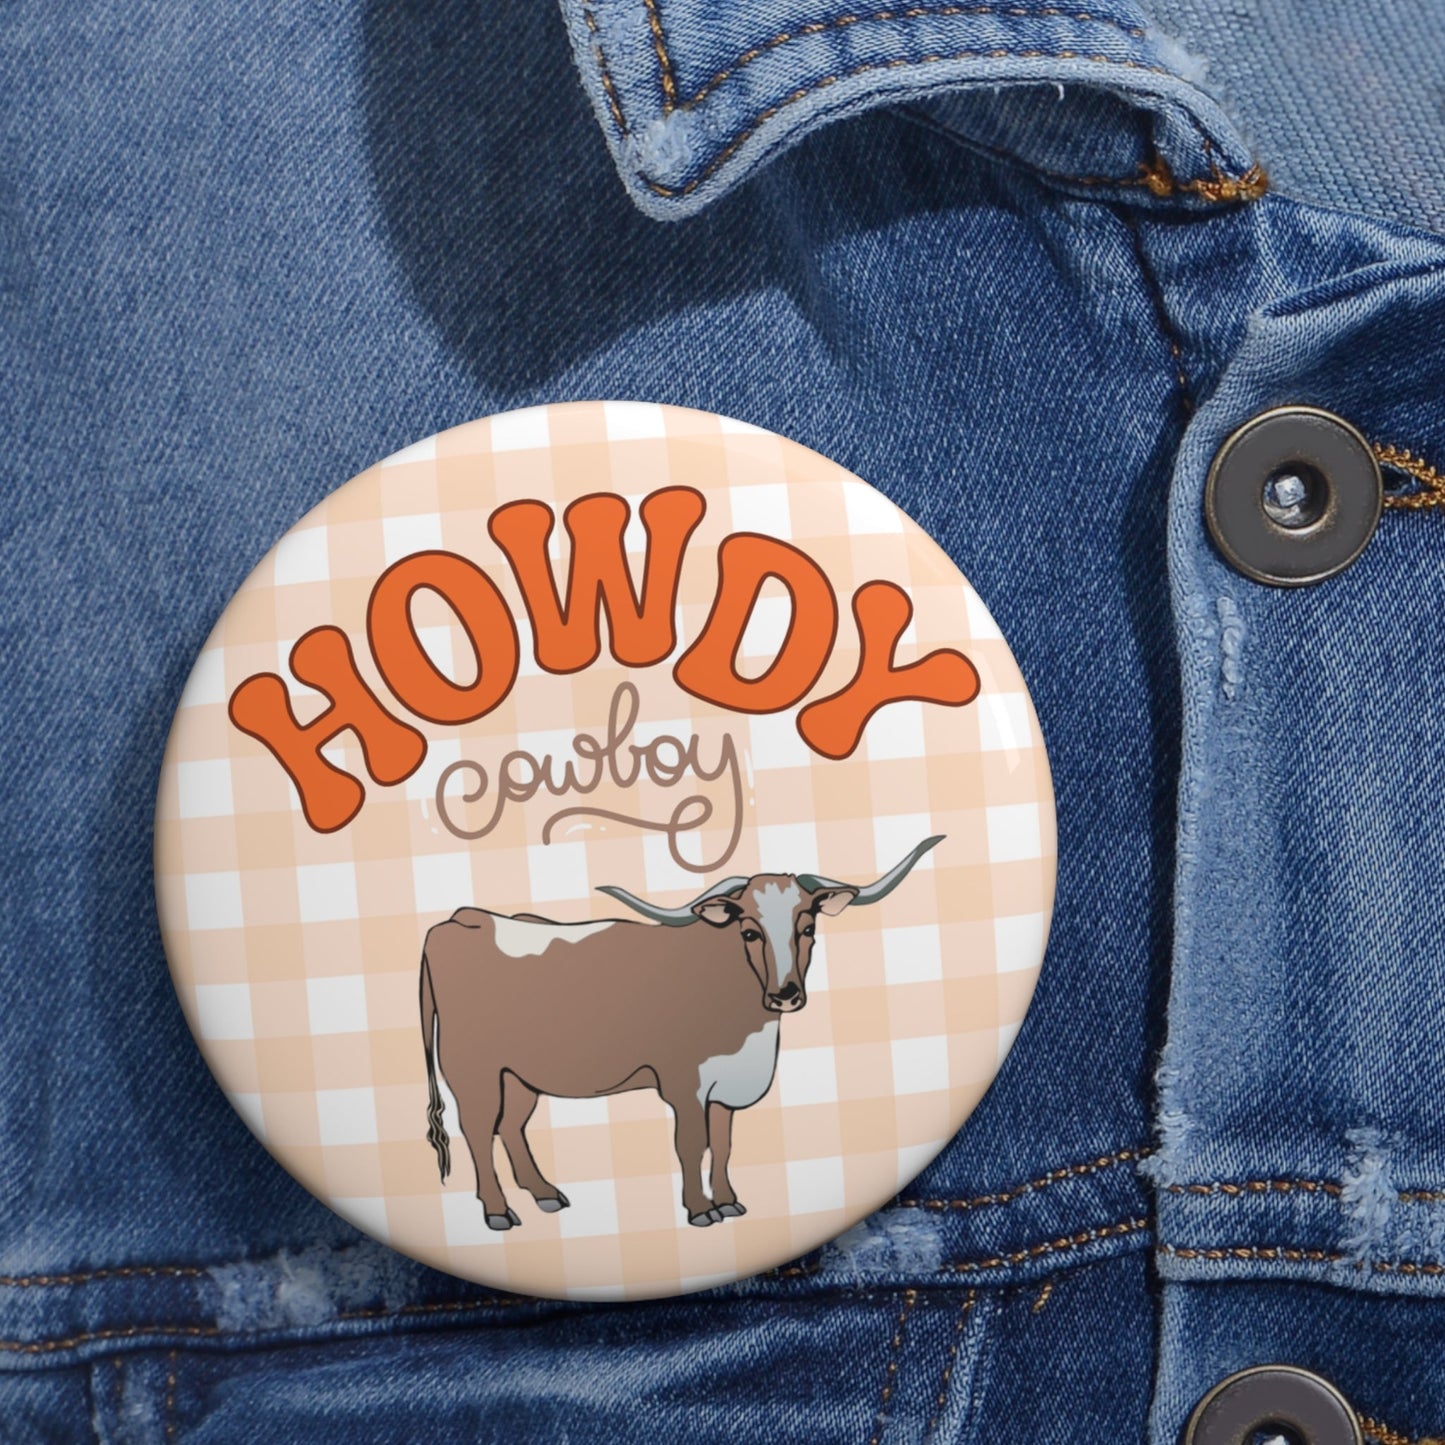 Howdy Cowboy Gameday Pin